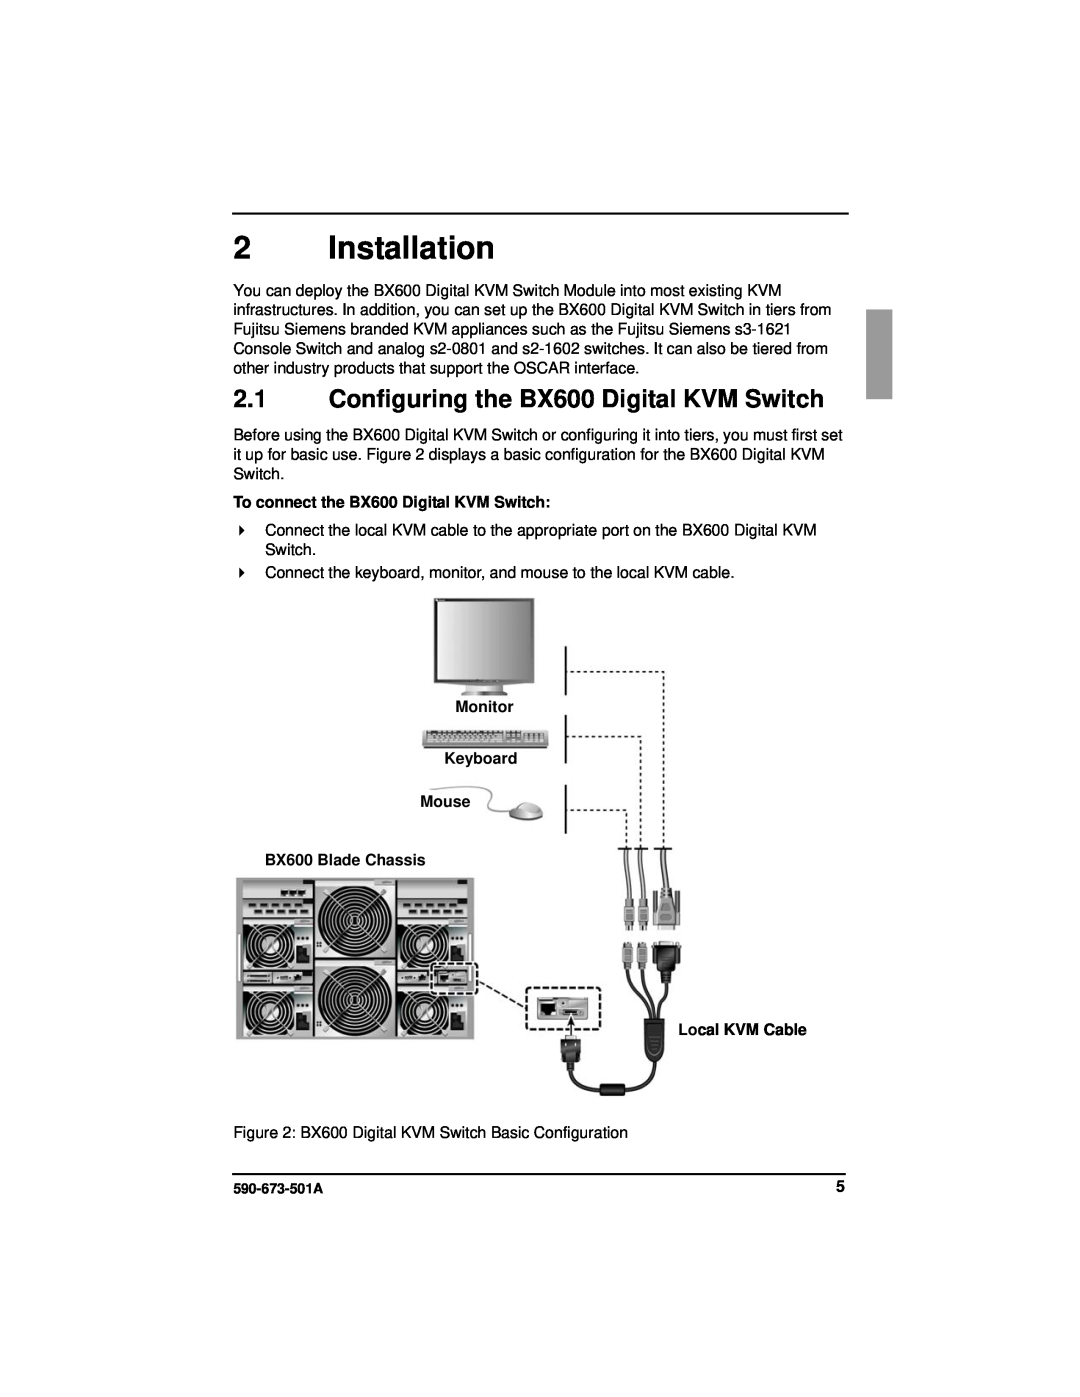 Fujitsu Siemens Computers manual Installation, Configuring the BX600 Digital KVM Switch 